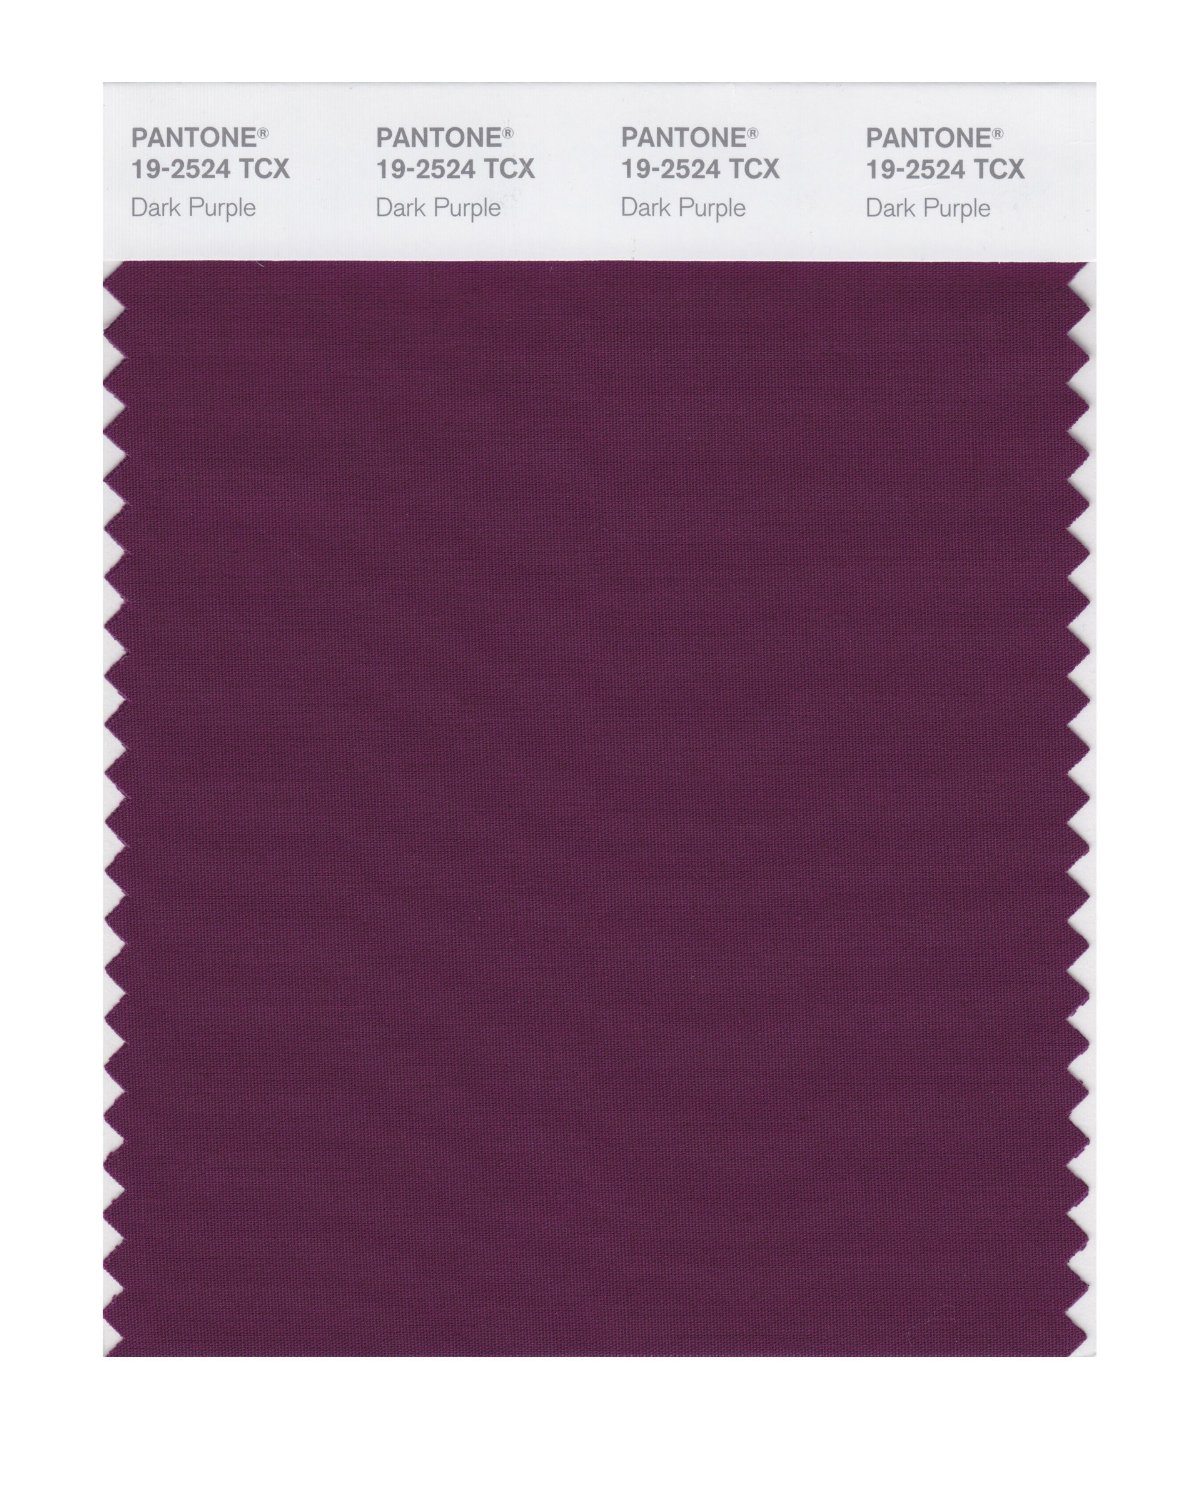 Pantone Cotton Swatch 19-2524 Dark Purple